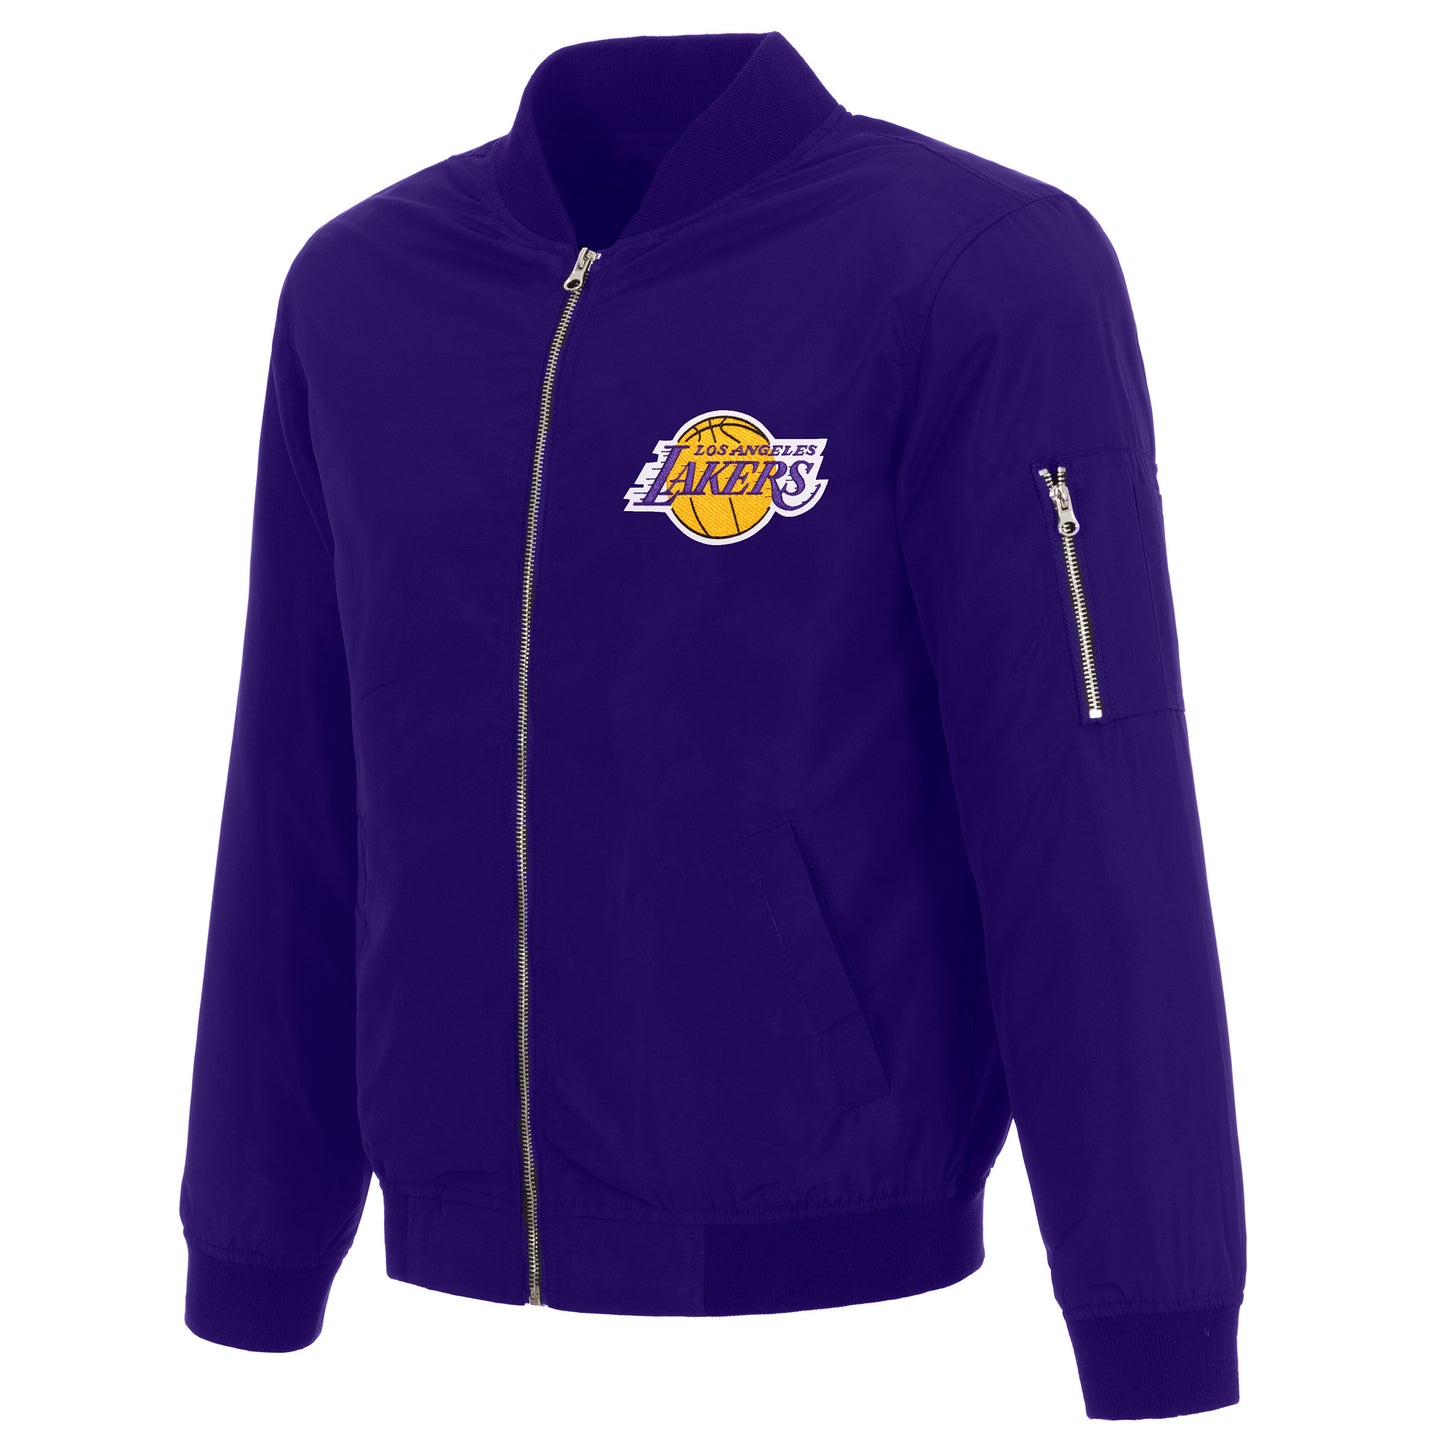 Los Angeles Lakers Nylon Bomber Jacket